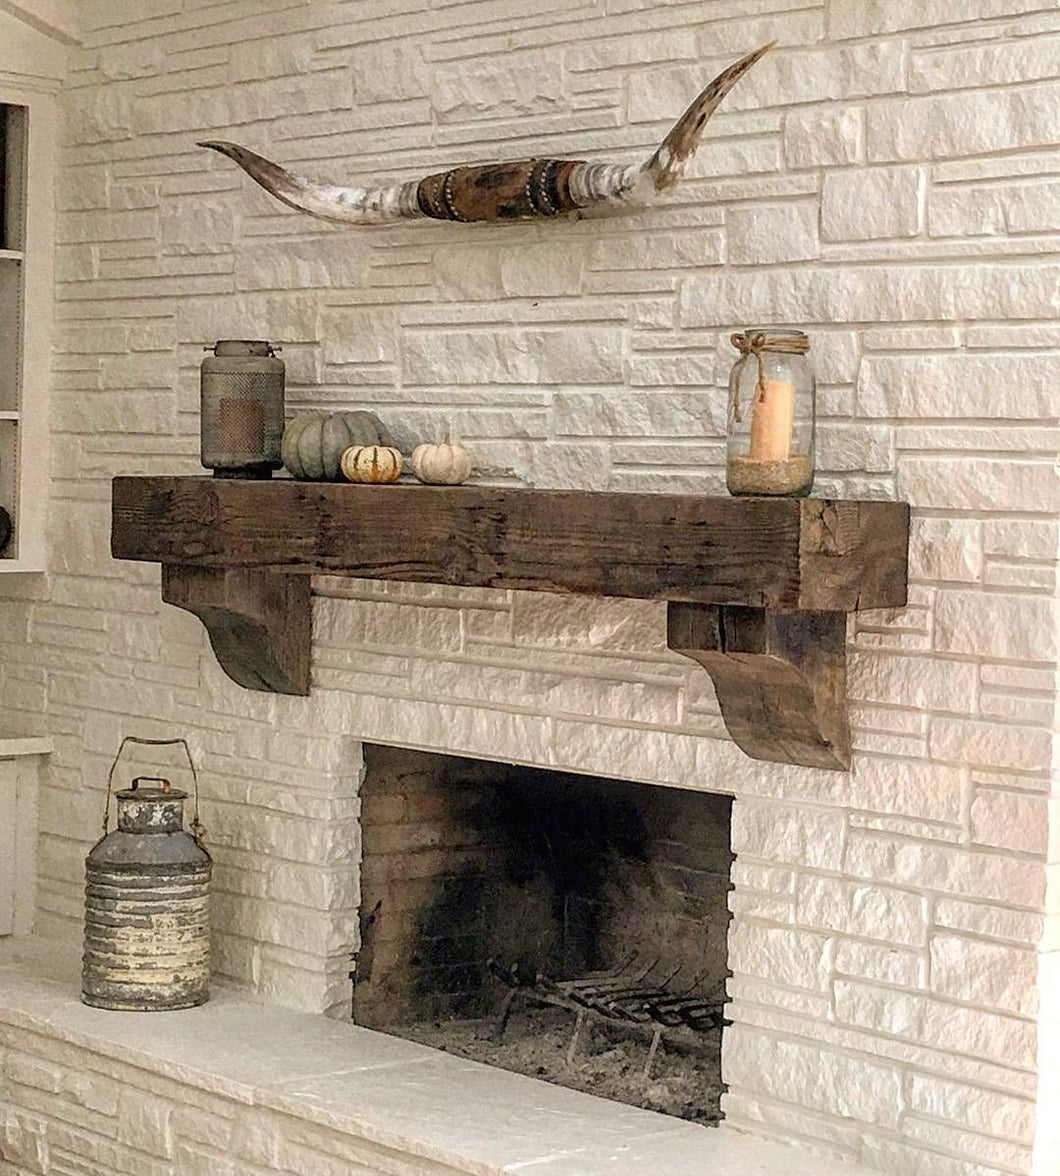 Hannah's fireplace mantel